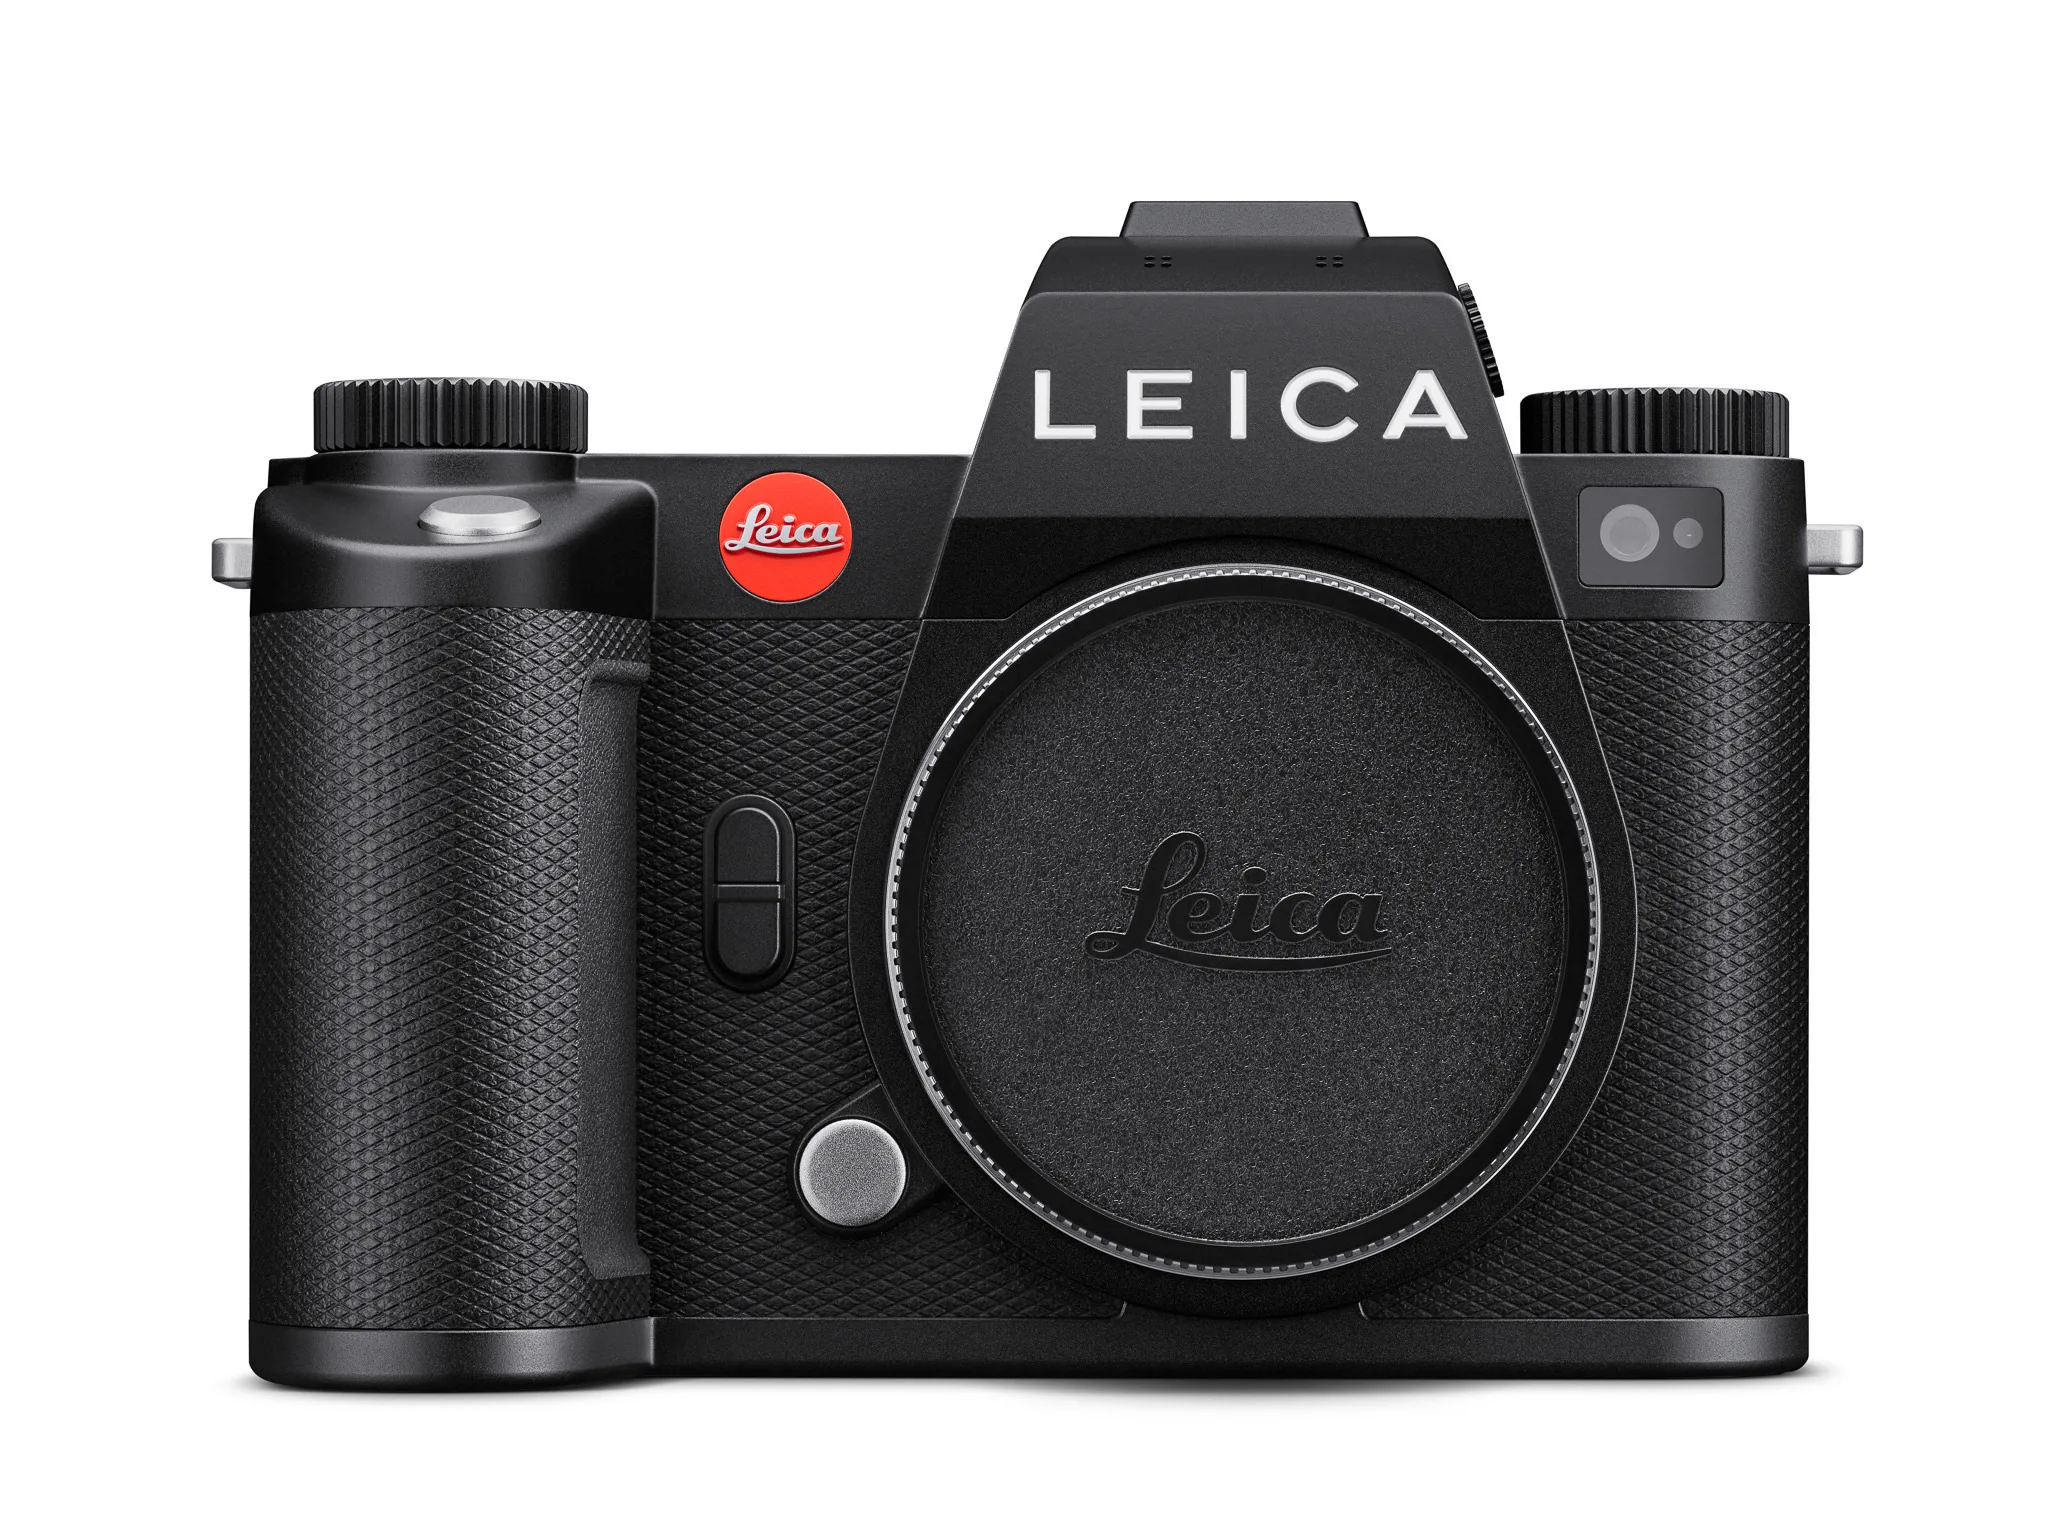 Anh san pham Leica SL3 ONTOP.vn 8